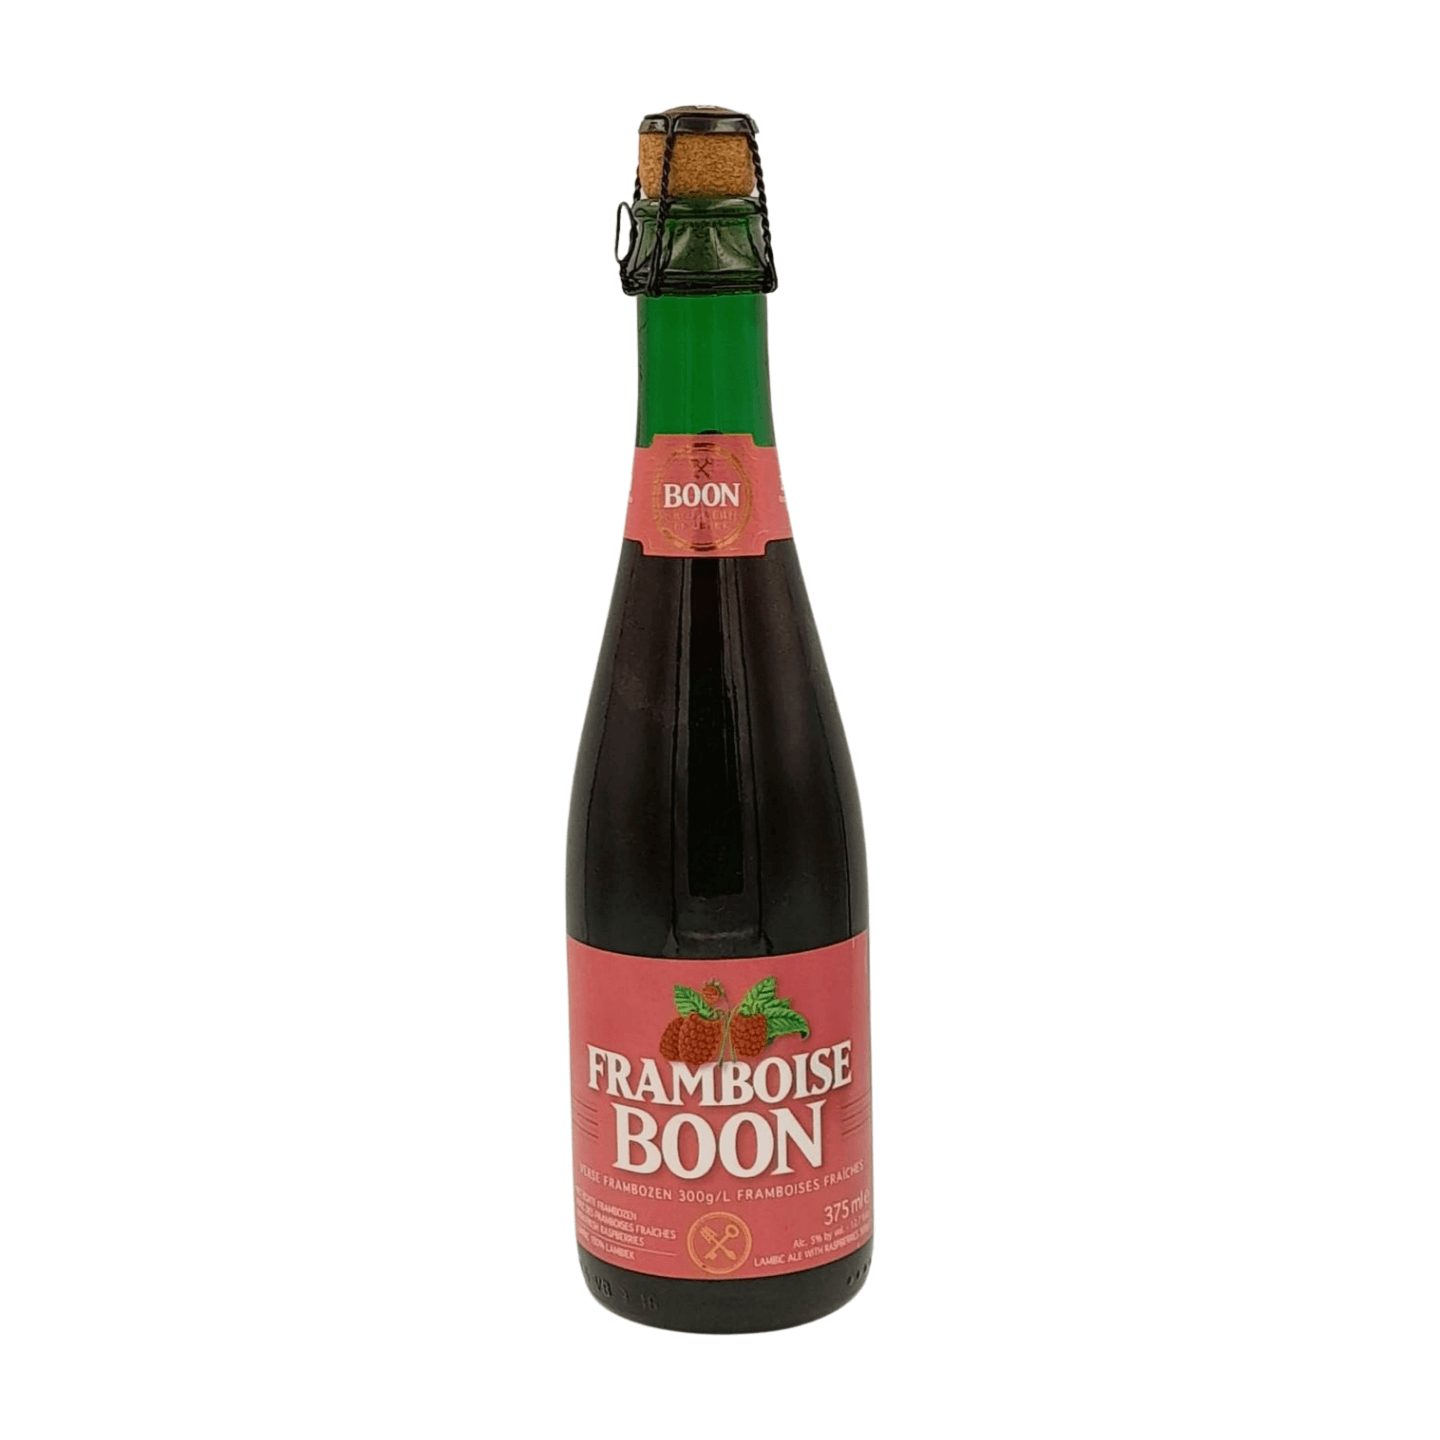 Boon Framboise Boon | Raspberry Kriek Webshop Online Verdins Bierwinkel Rotterdam